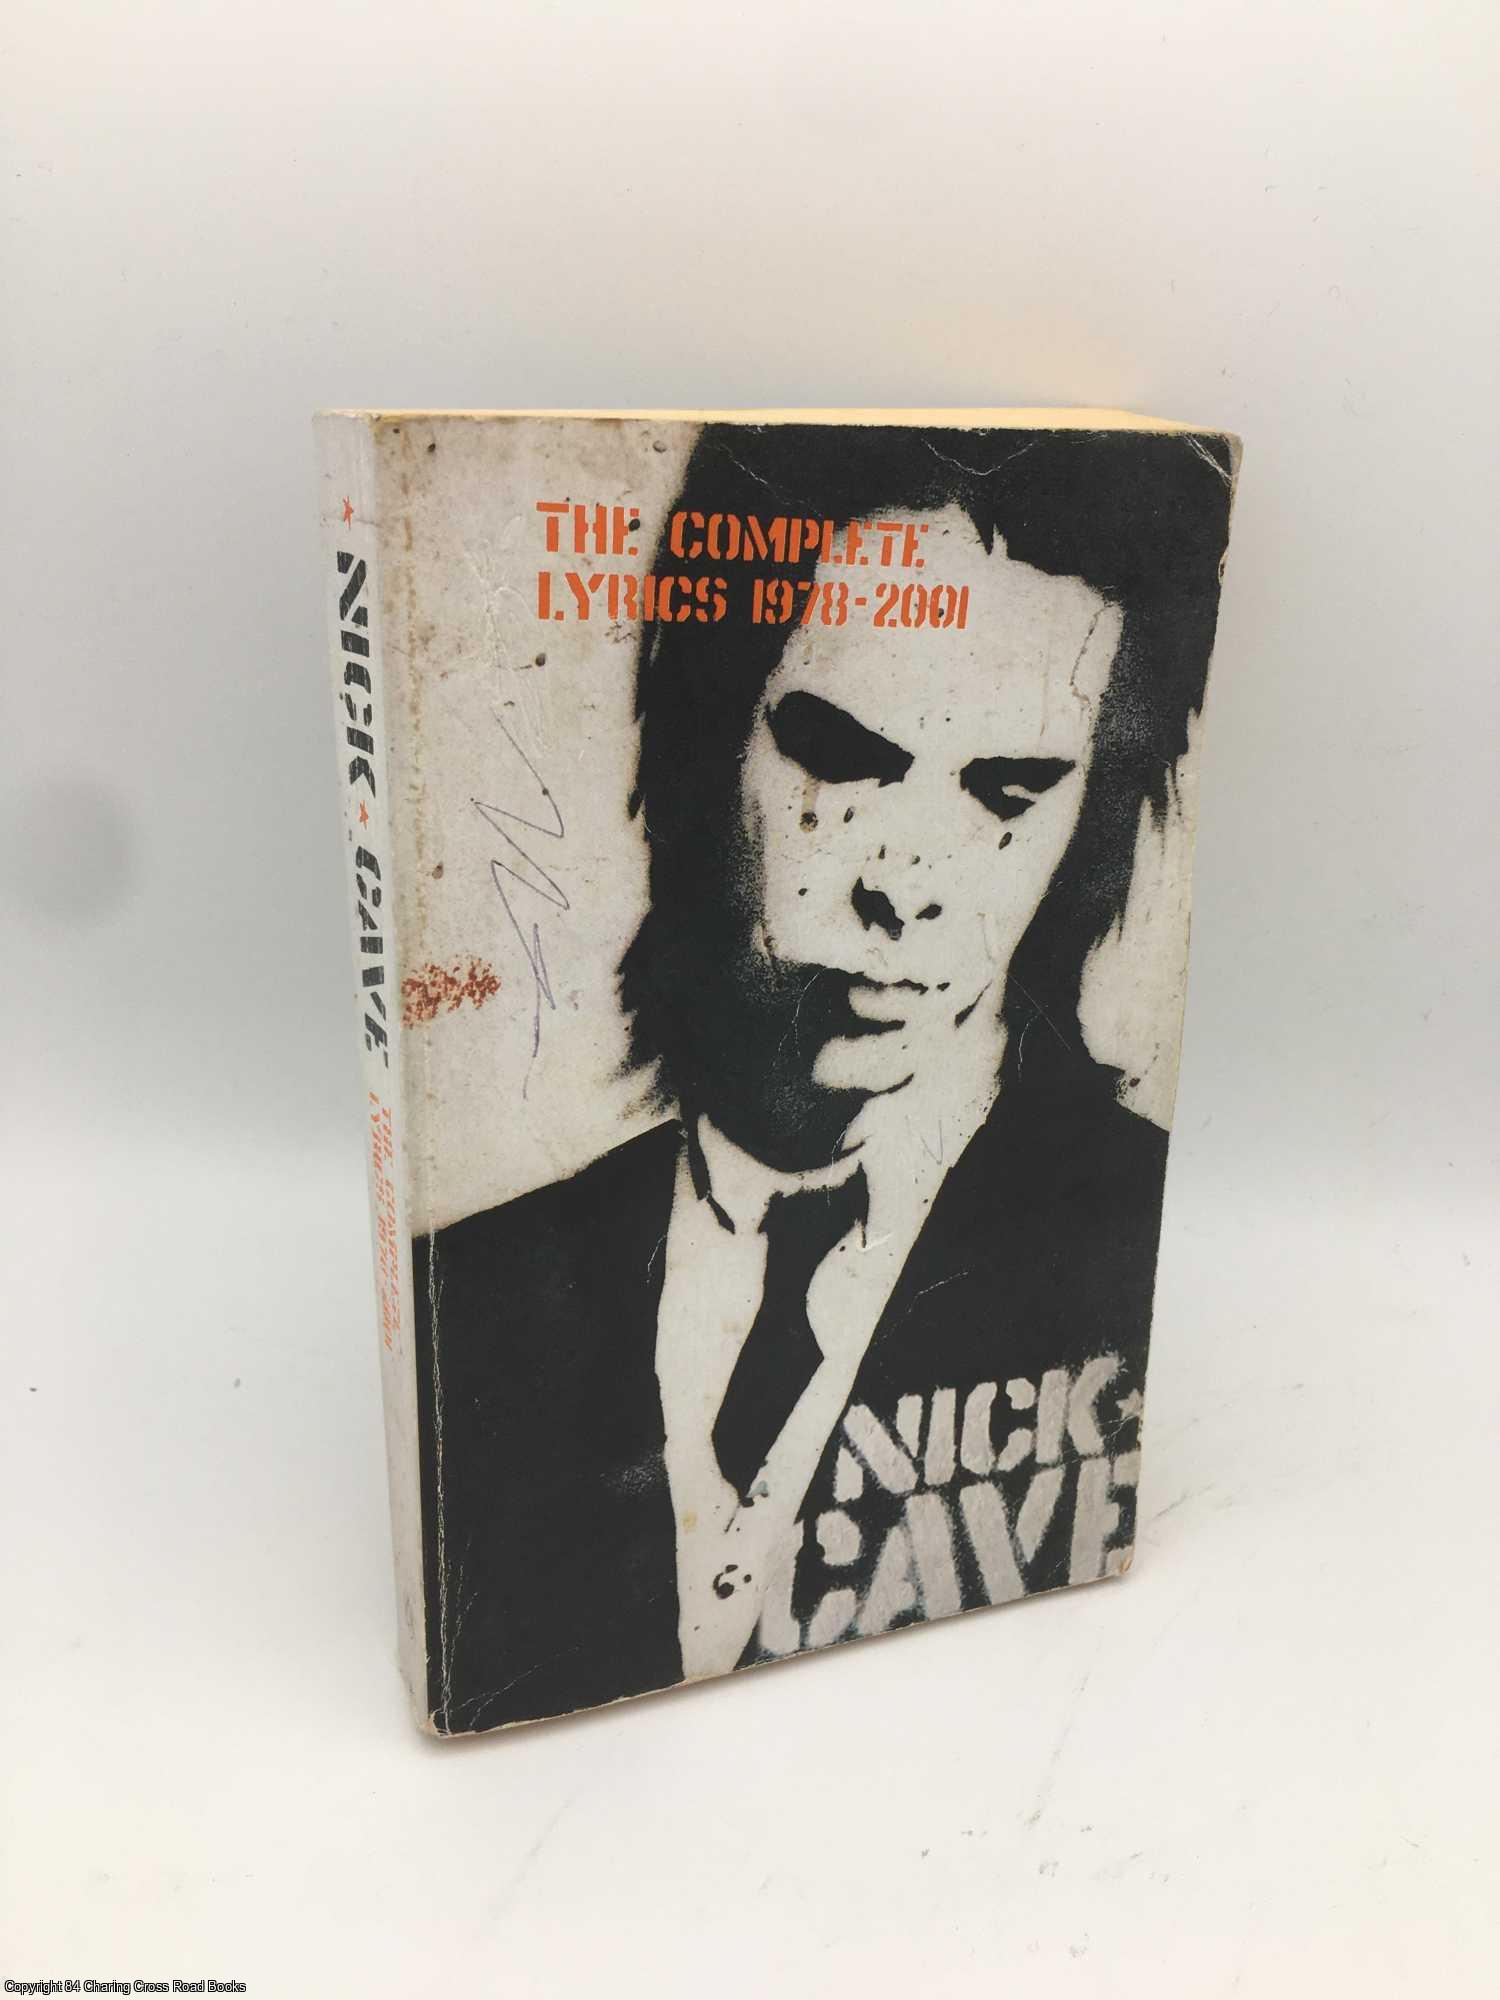 Cave, Nick - The Complete Lyrics 1978-2001